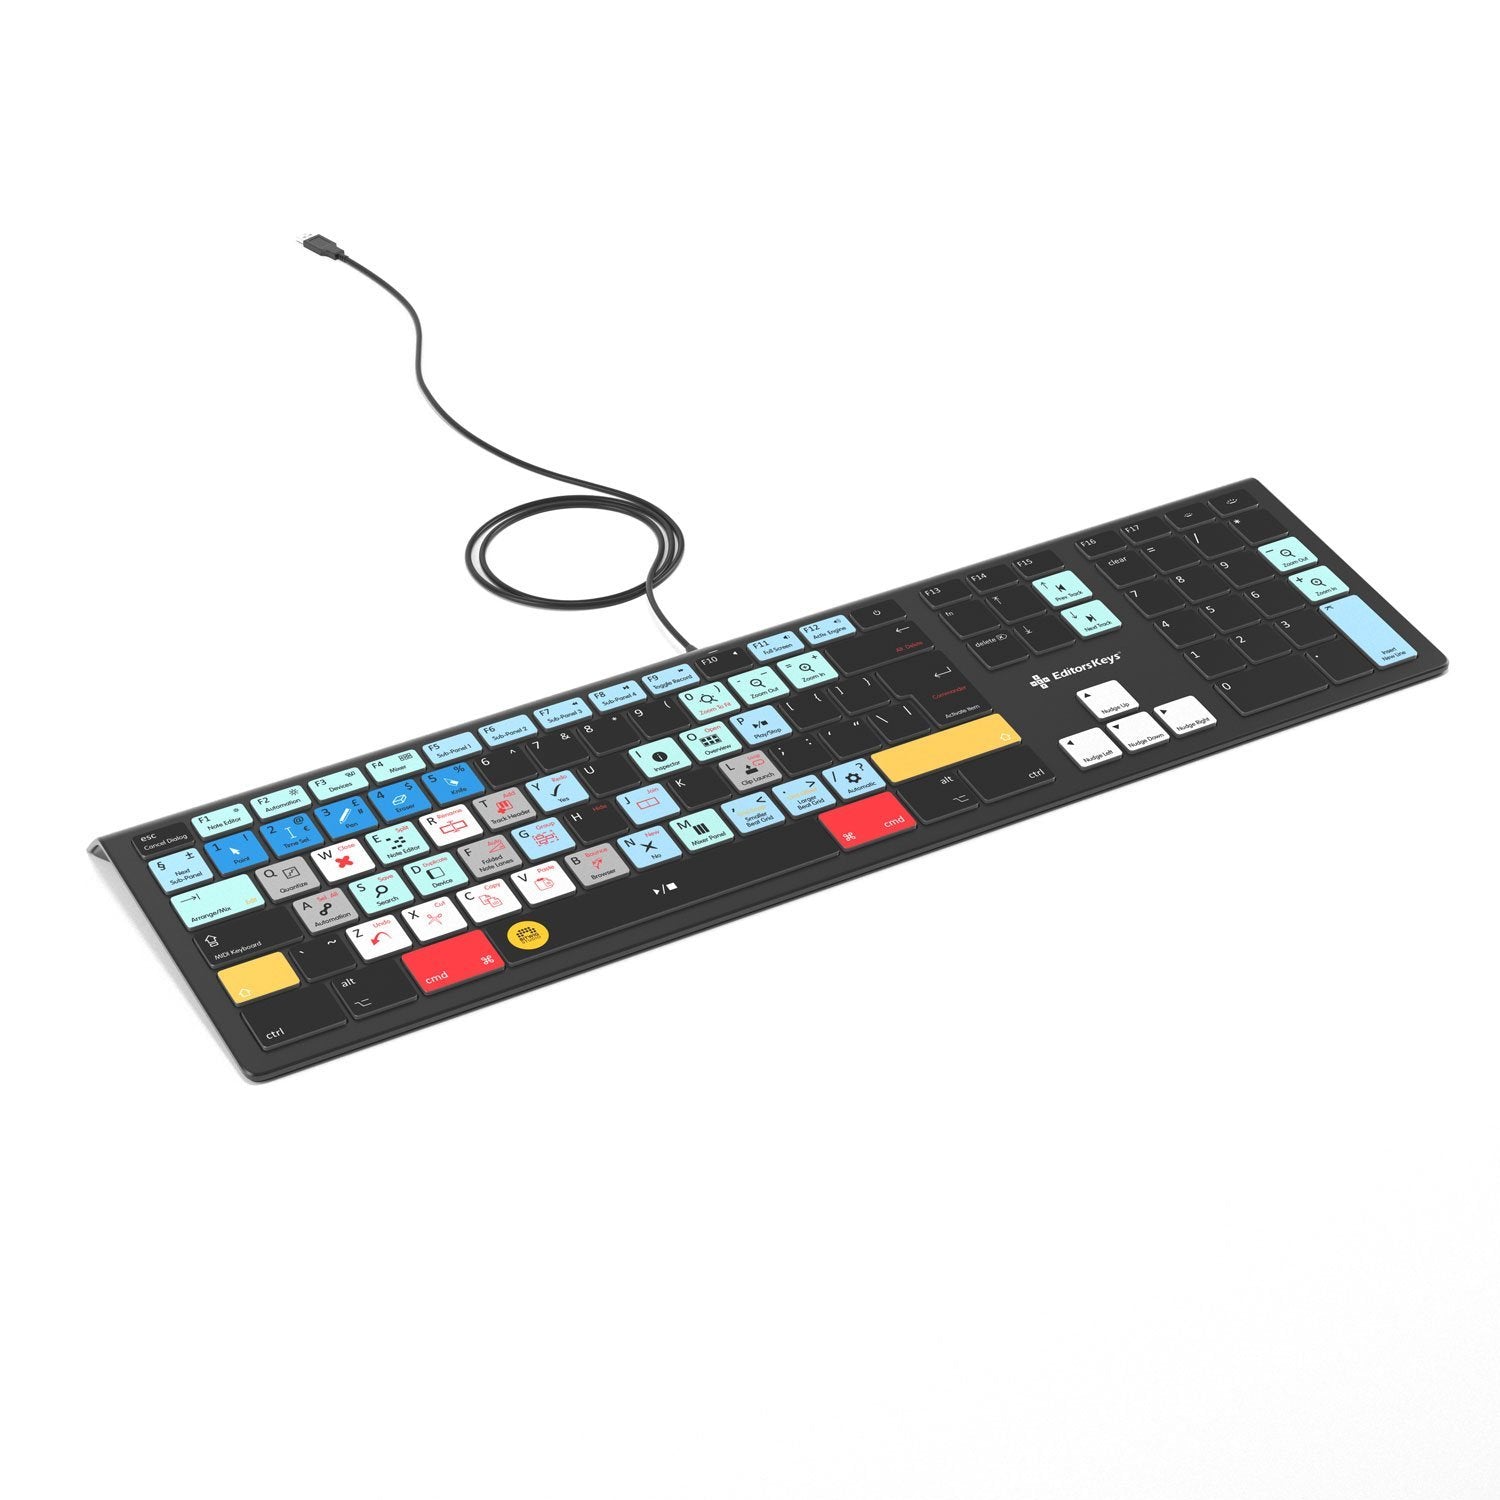 Bitwig Studio Keyboard - Backlit - For Mac or PC - Editors Keys